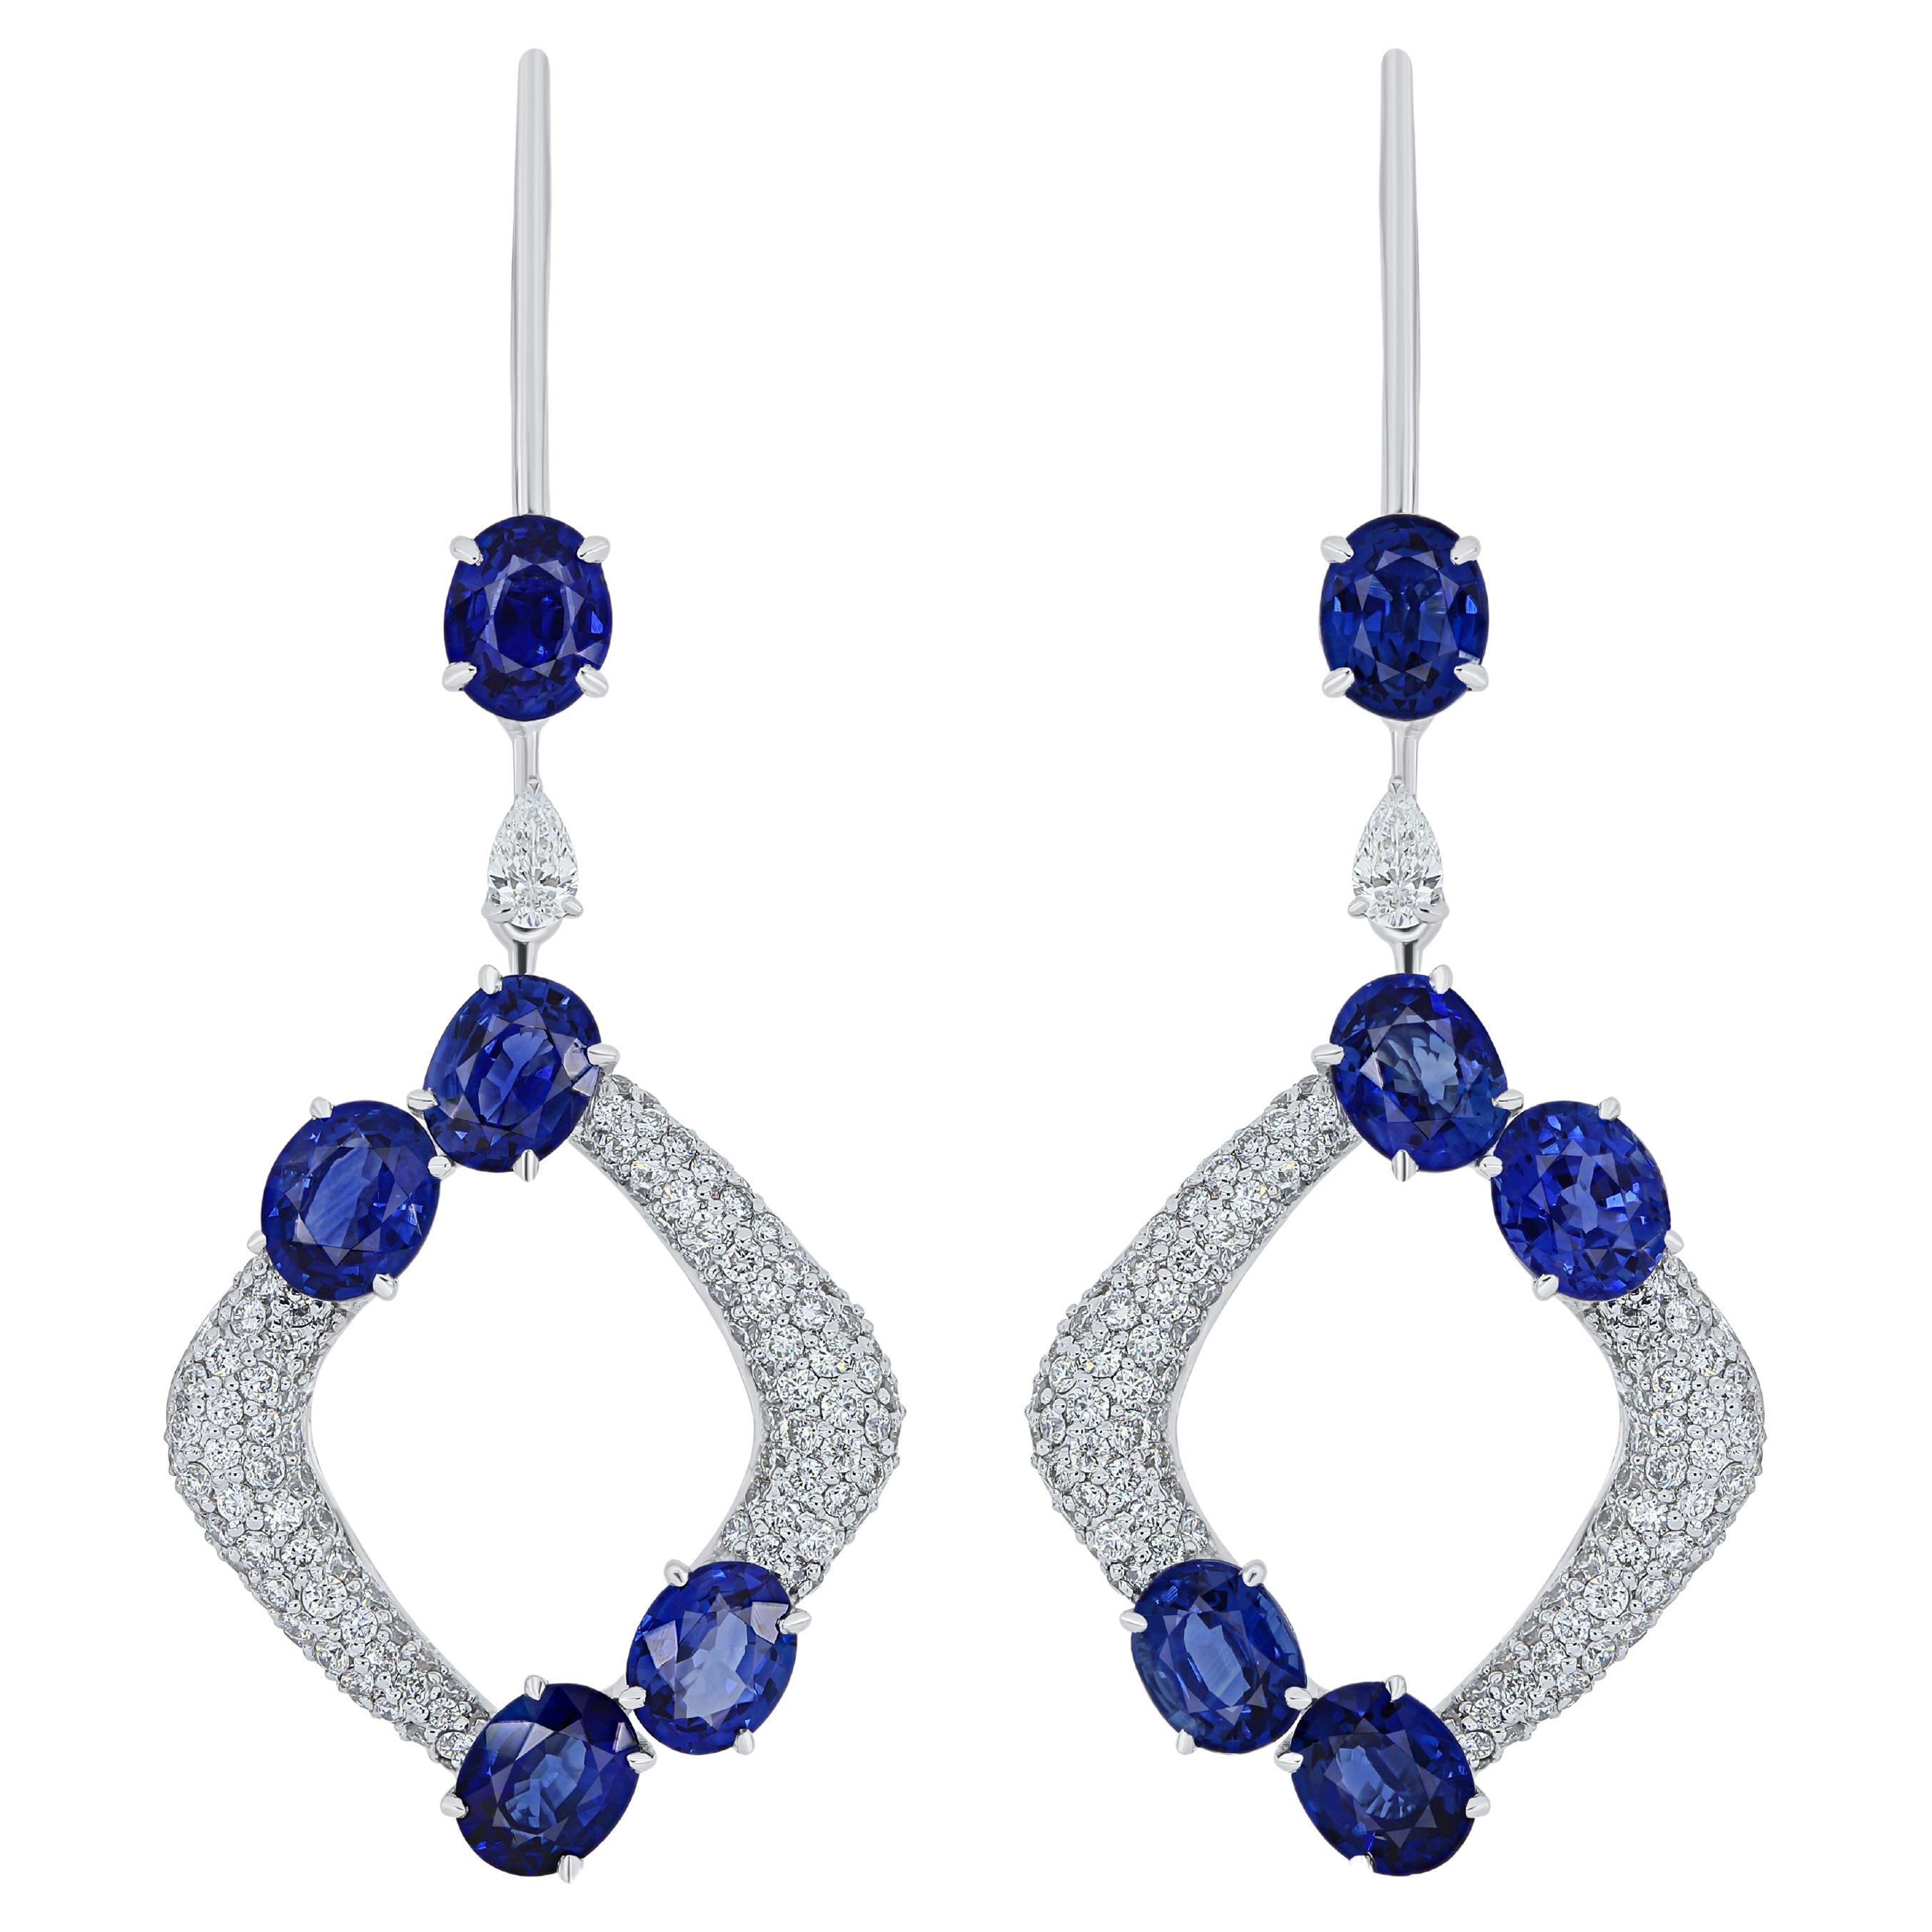 Blue Sapphire and Diamond Studded Earrings in 18 Karat White Gold